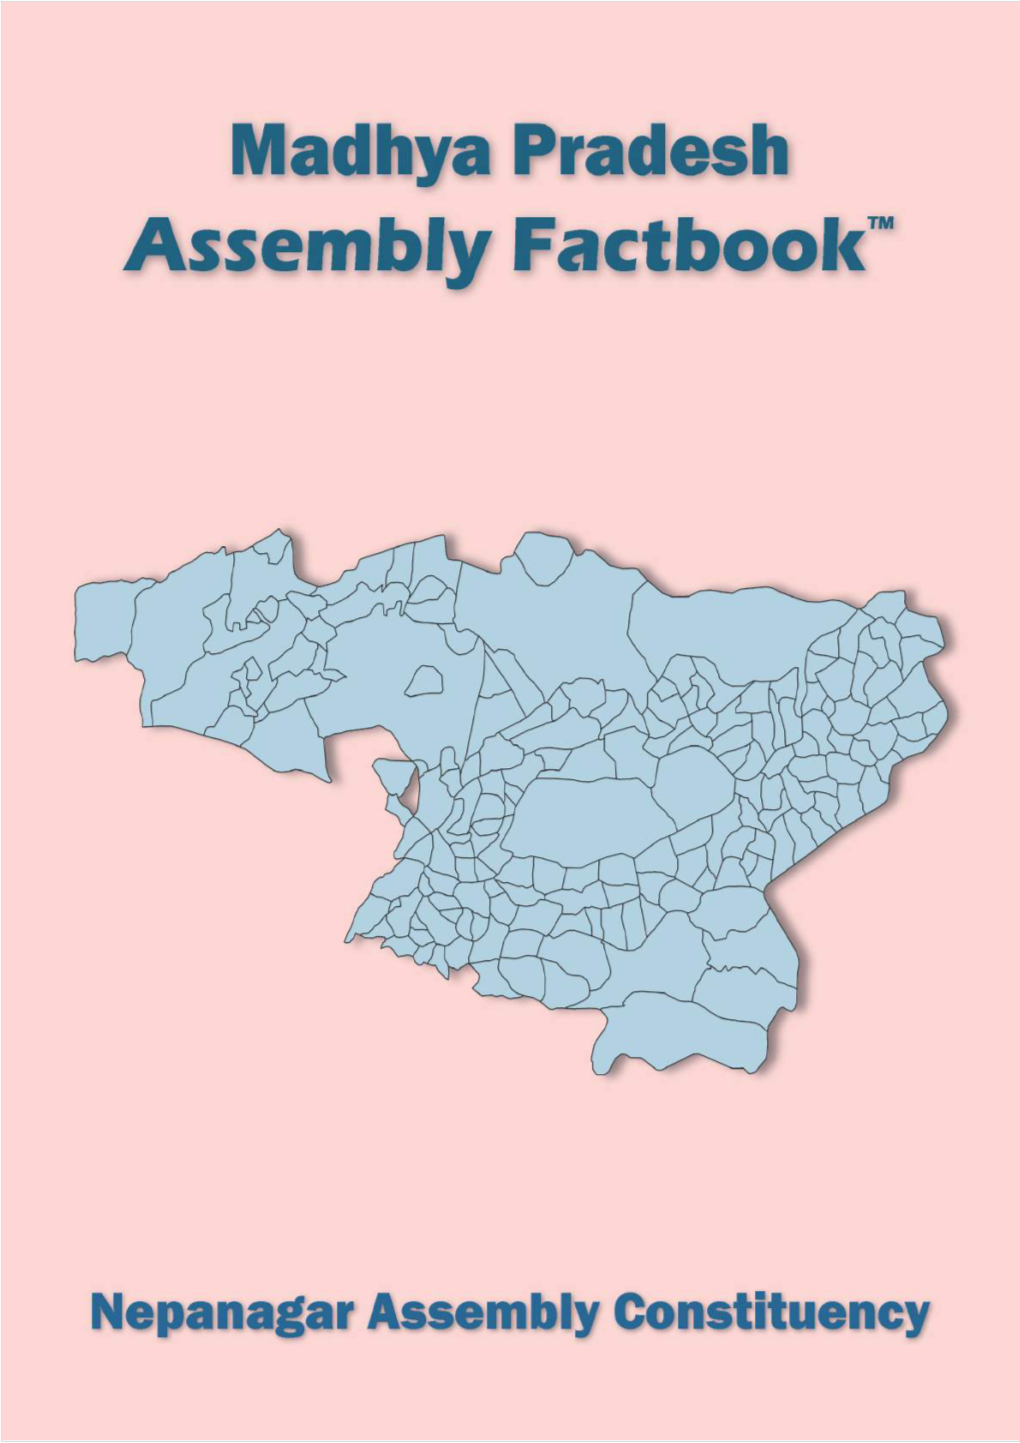 Nepanagar Assembly Madhya Pradesh Factbook